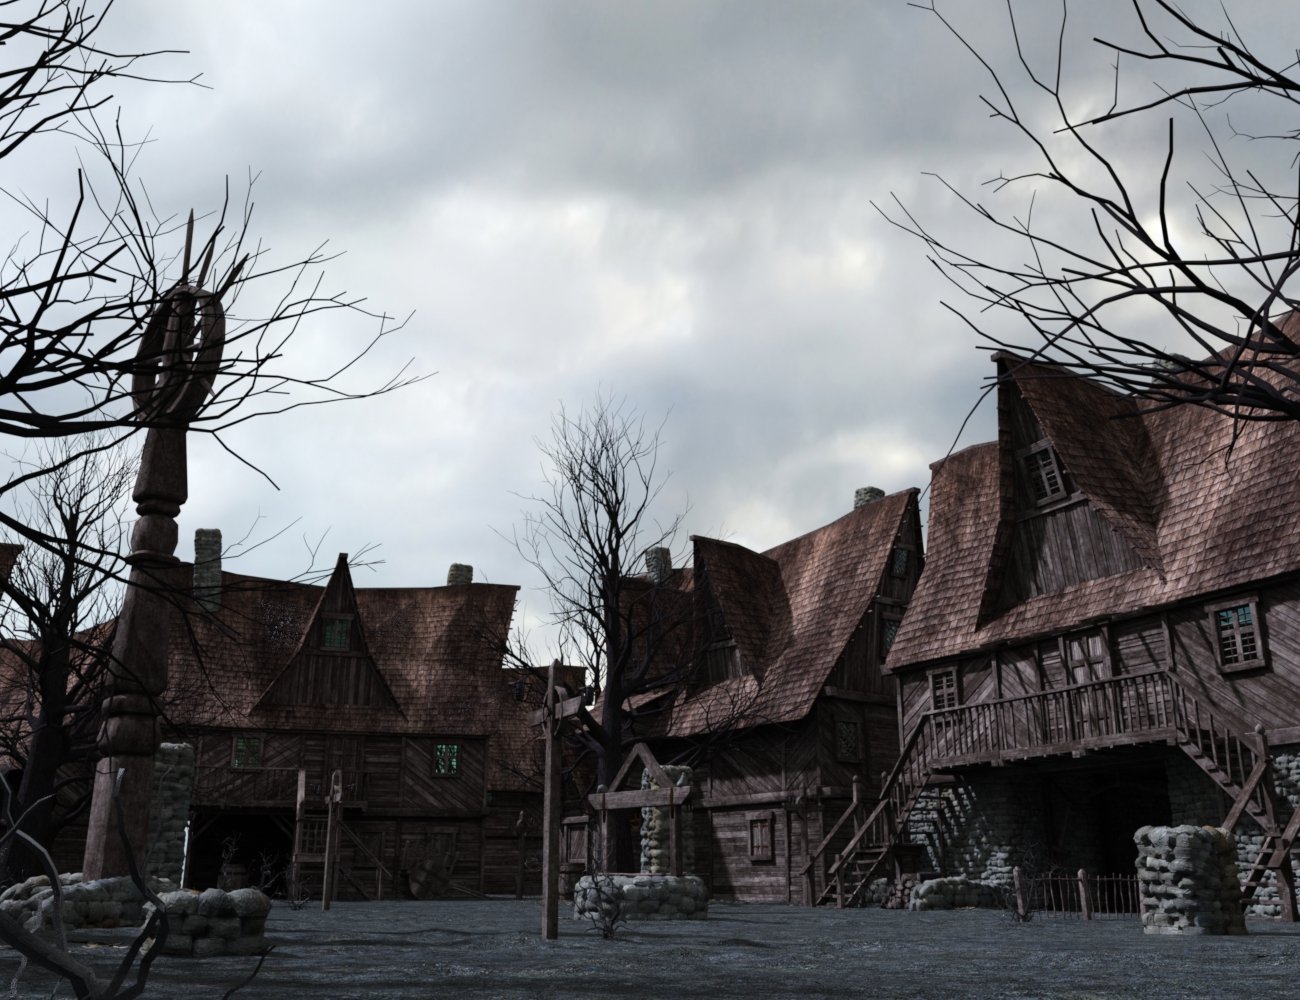 Forsaken Village and Construction Set by: DzFire, 3D Models by Daz 3D